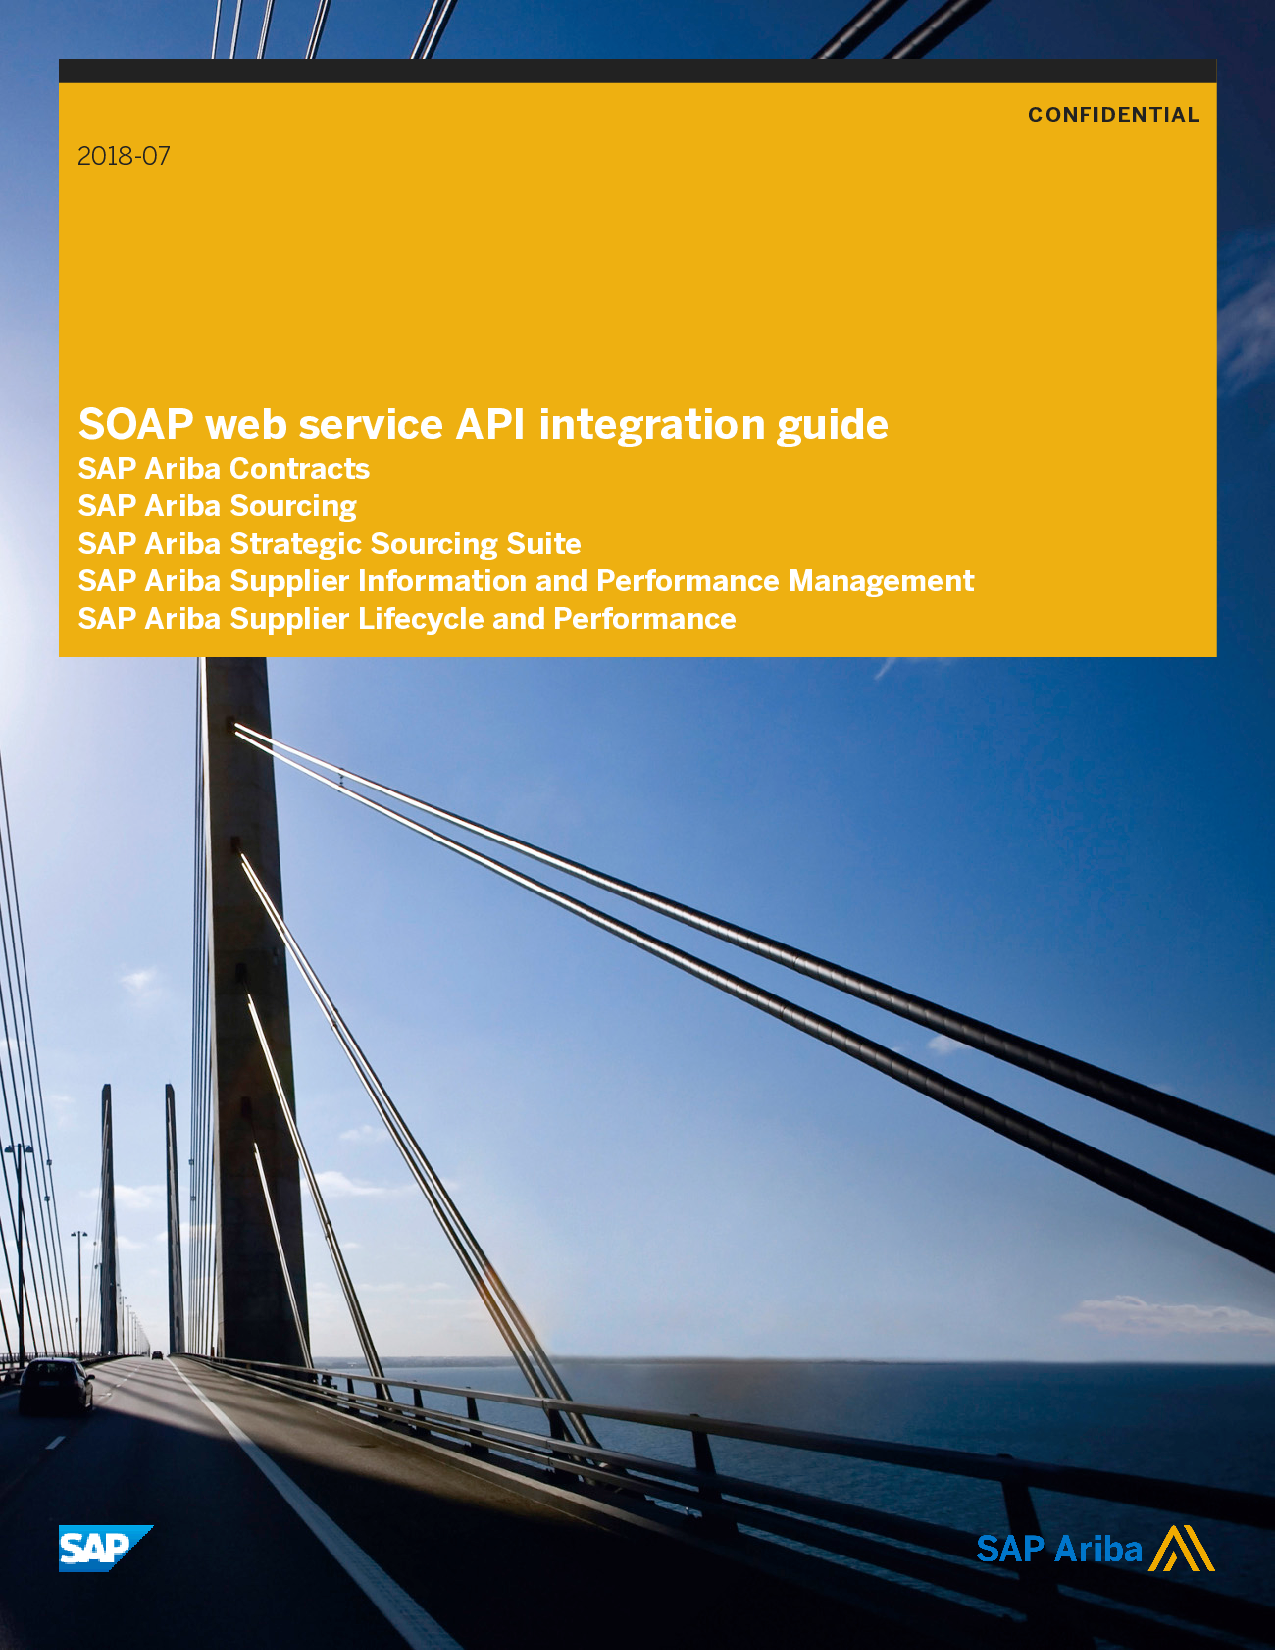 SOAP Web Service API Integration Guide SOAP+web+service+API+integration